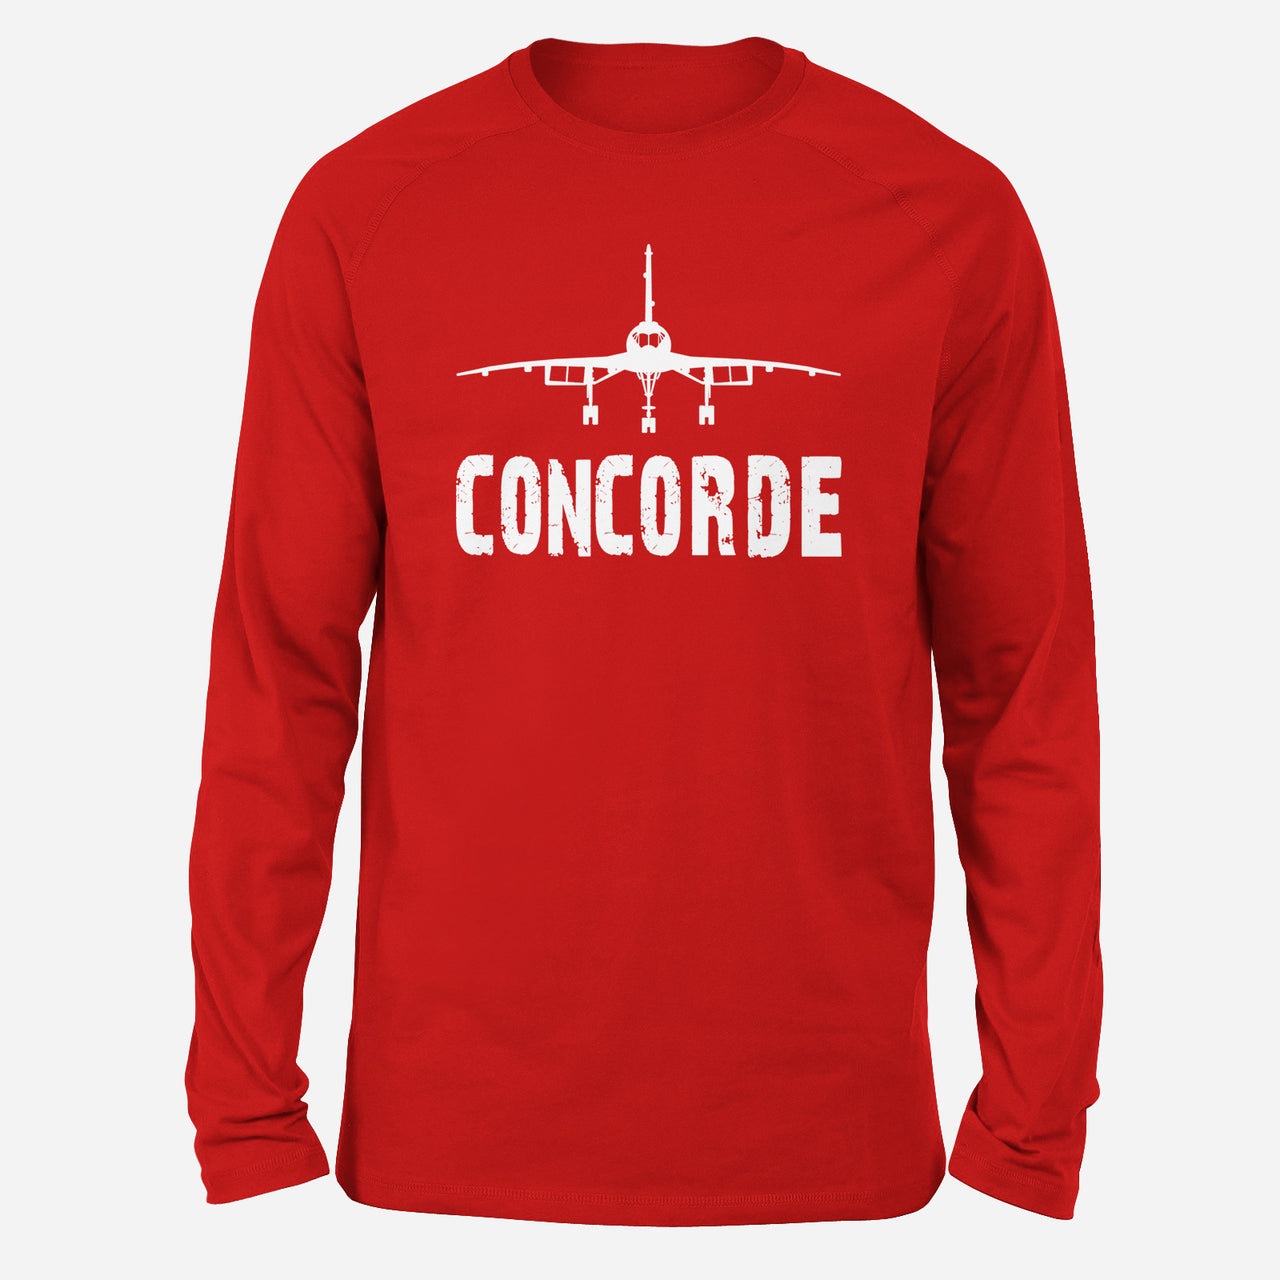 Concorde & Plane Designed Long-Sleeve T-Shirts